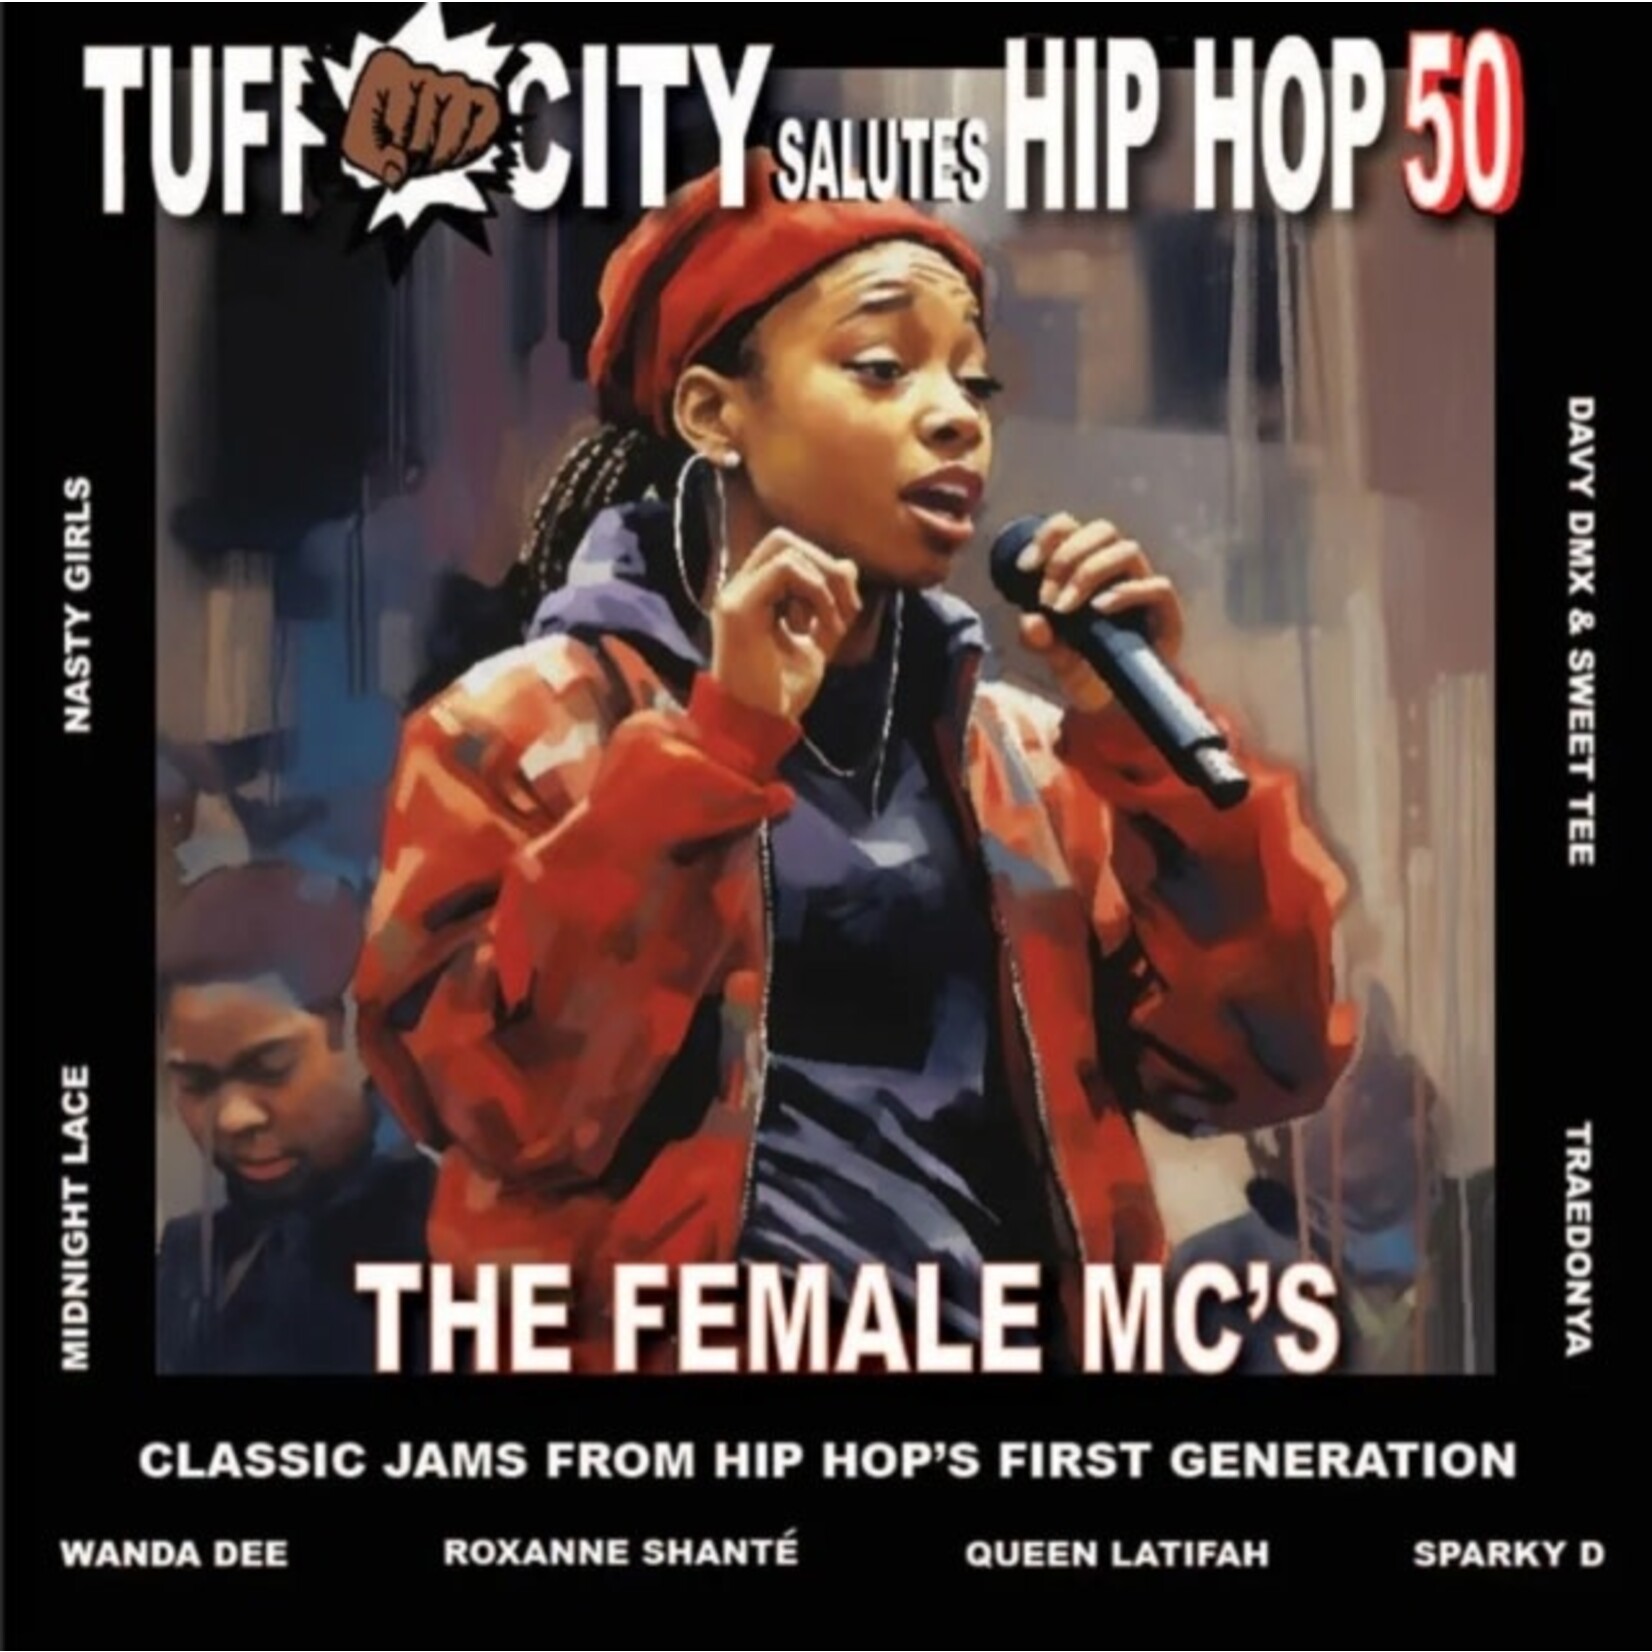 Various Artists - Tuff City Salutes Hip Hop 50: The Female MC's (Red/Orange Vinyl) [LP/7"] (RSDBF2023)